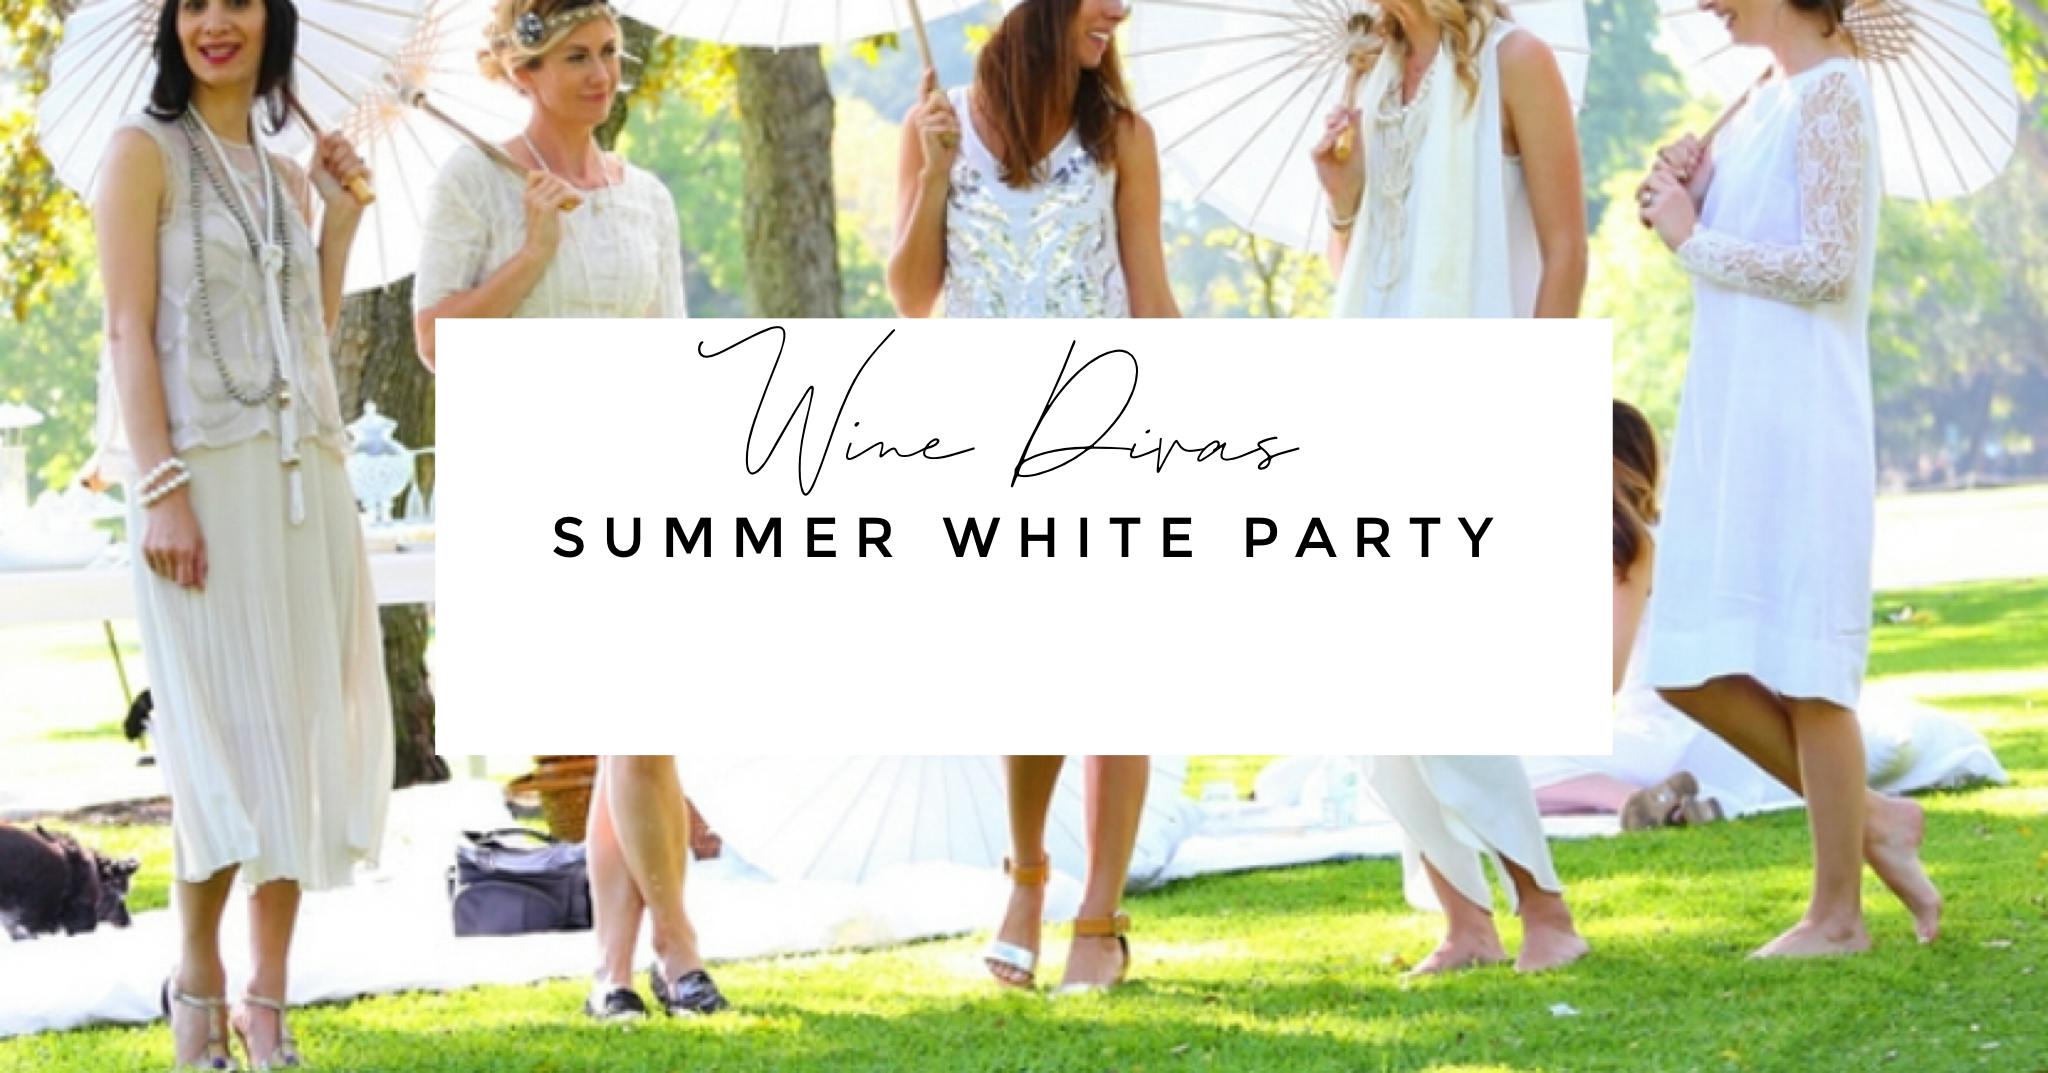 The White Party 24 Aug 2019